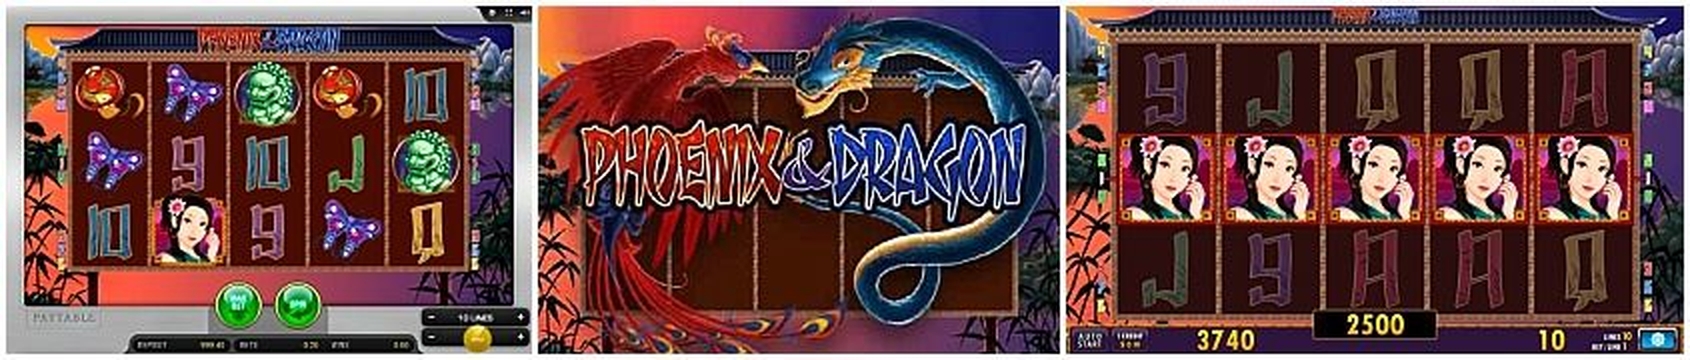 Phoenix & Dragon HD demo